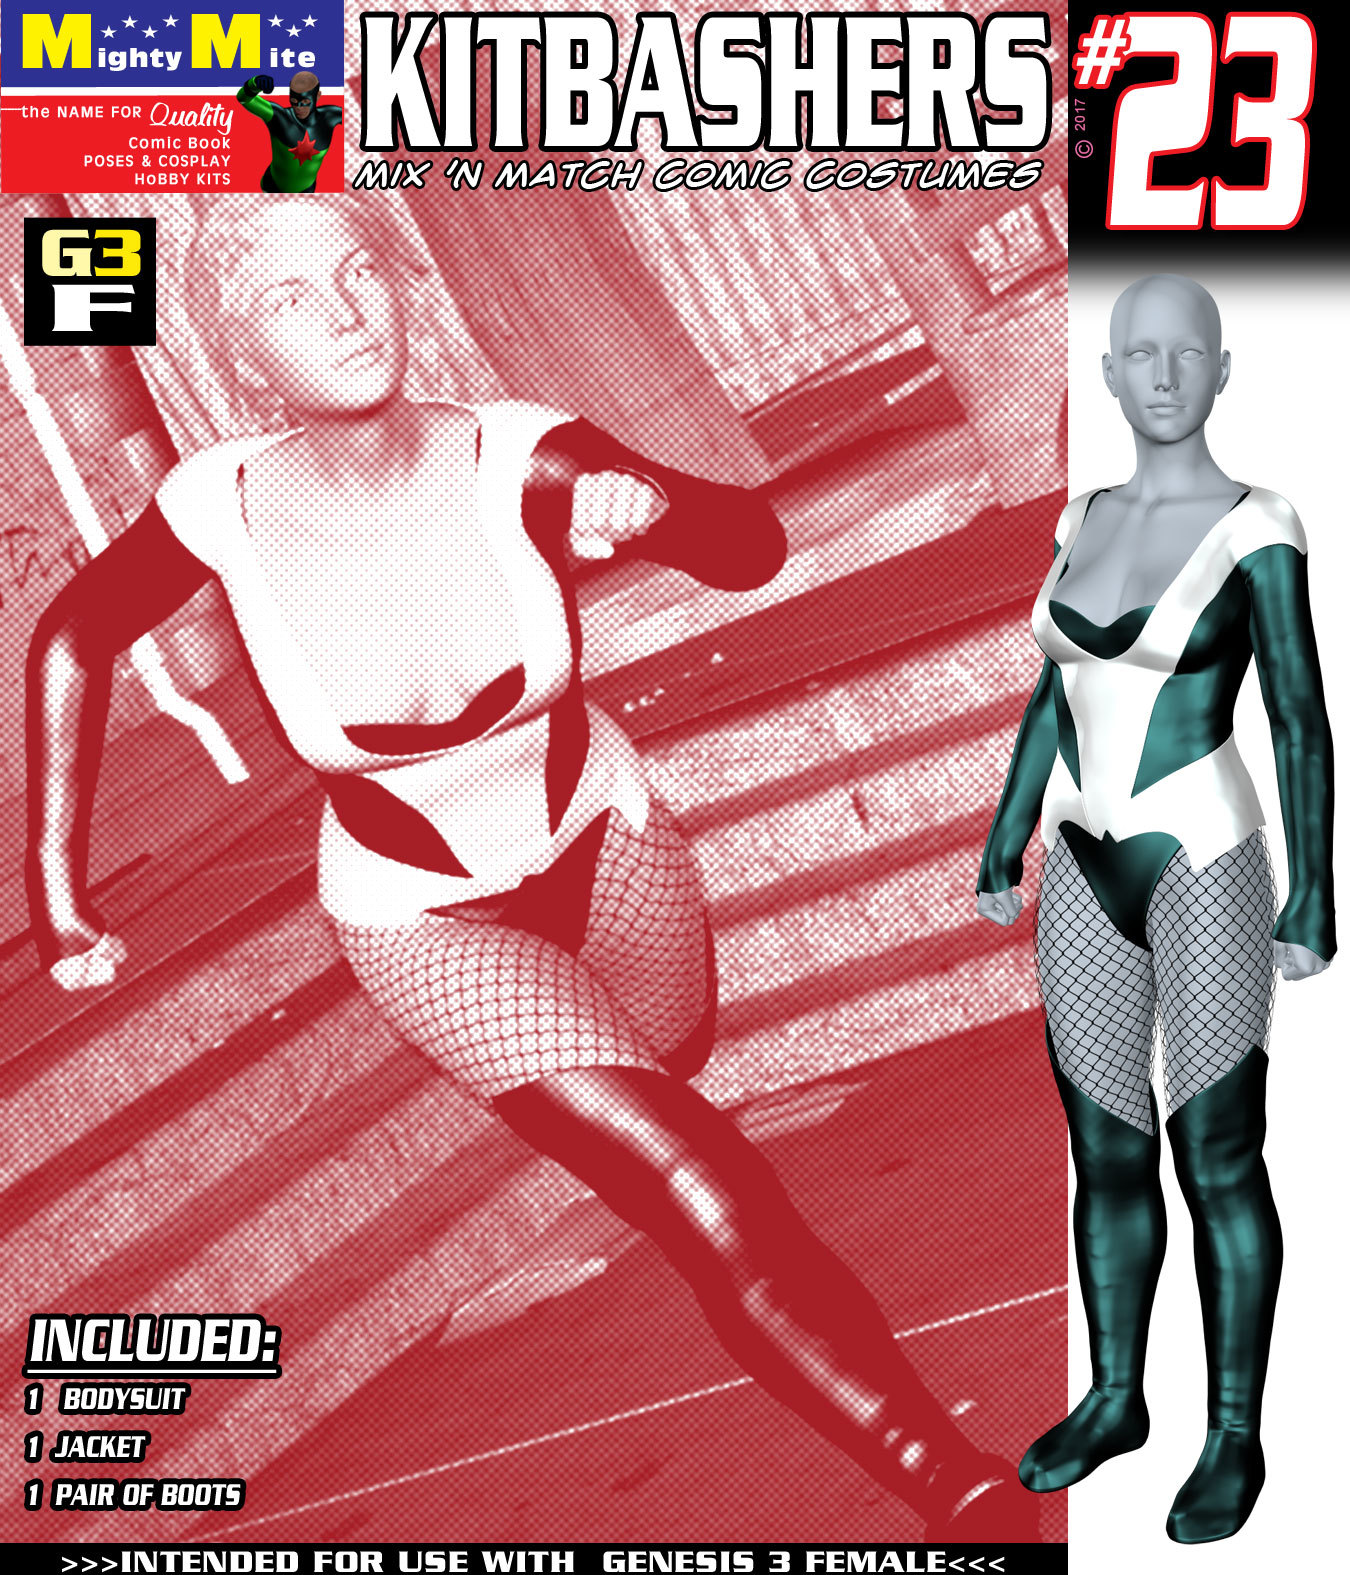 Kitbashers 023 MMG3F by: MightyMite, 3D Models by Daz 3D